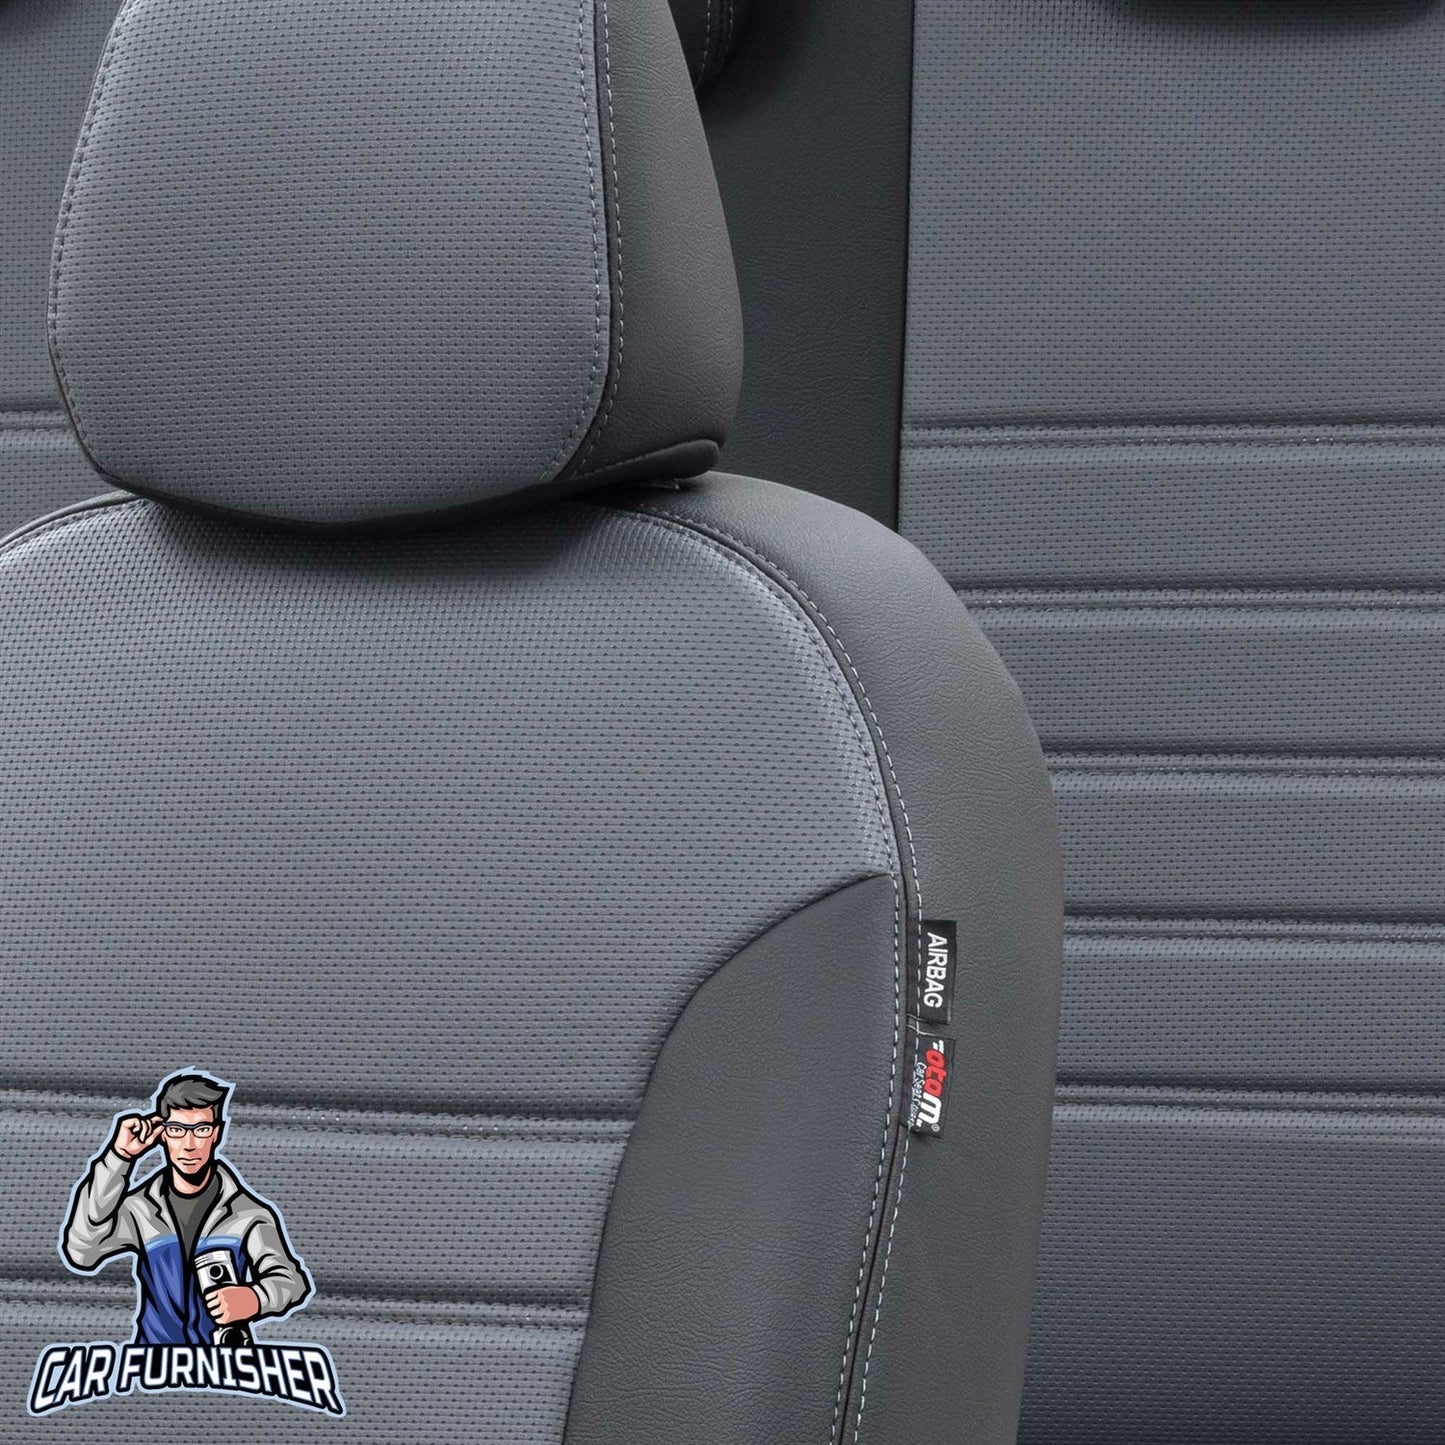 Suzuki Baleno Seat Covers New York Leather Design Smoked Black Leather